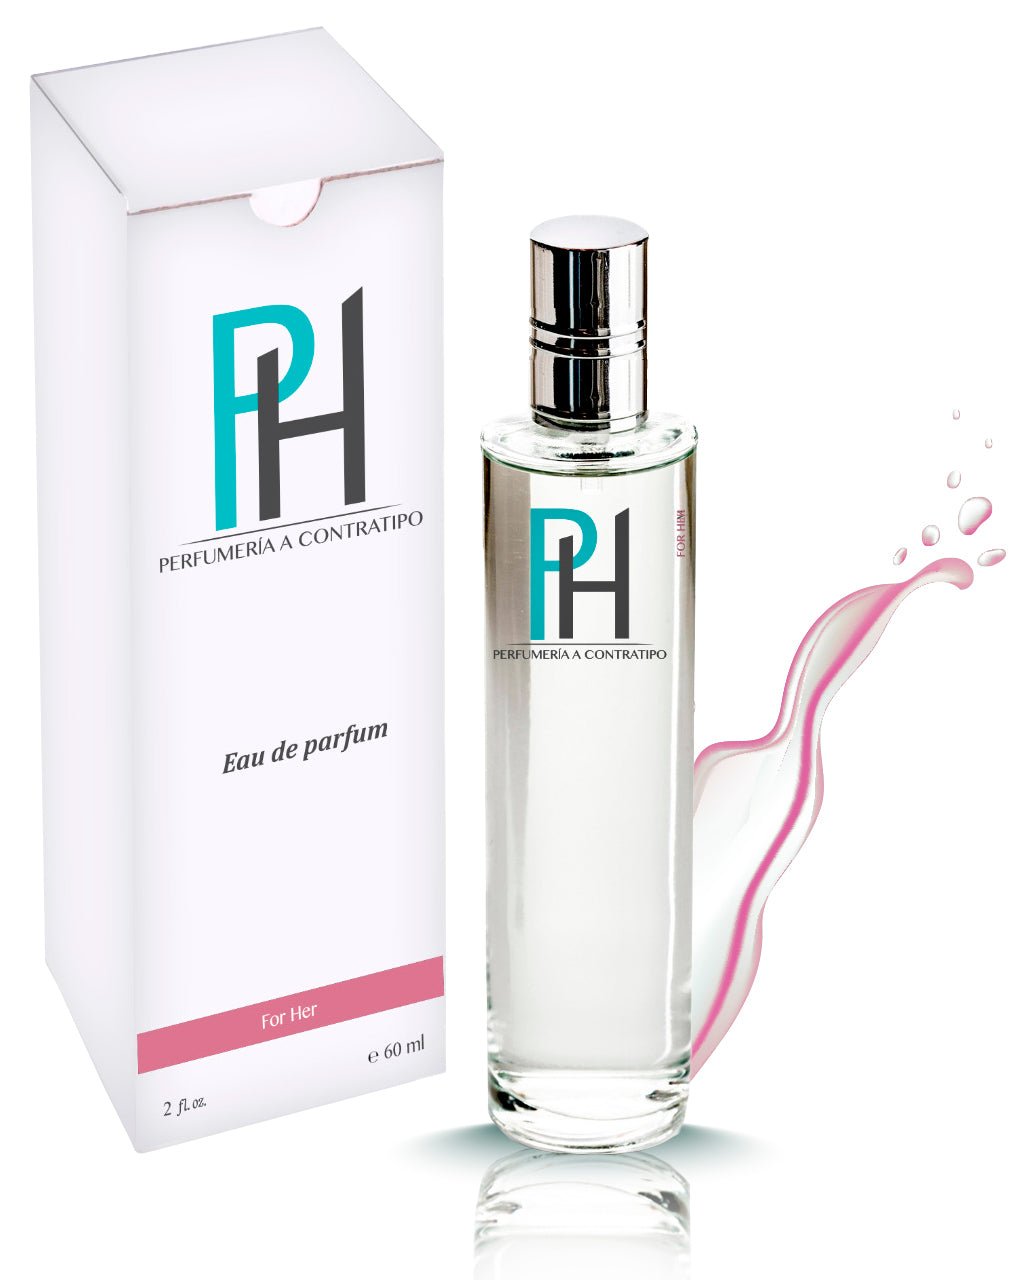 Perfume The Scent w de 60 ml - PH Perfumería a Contratipo